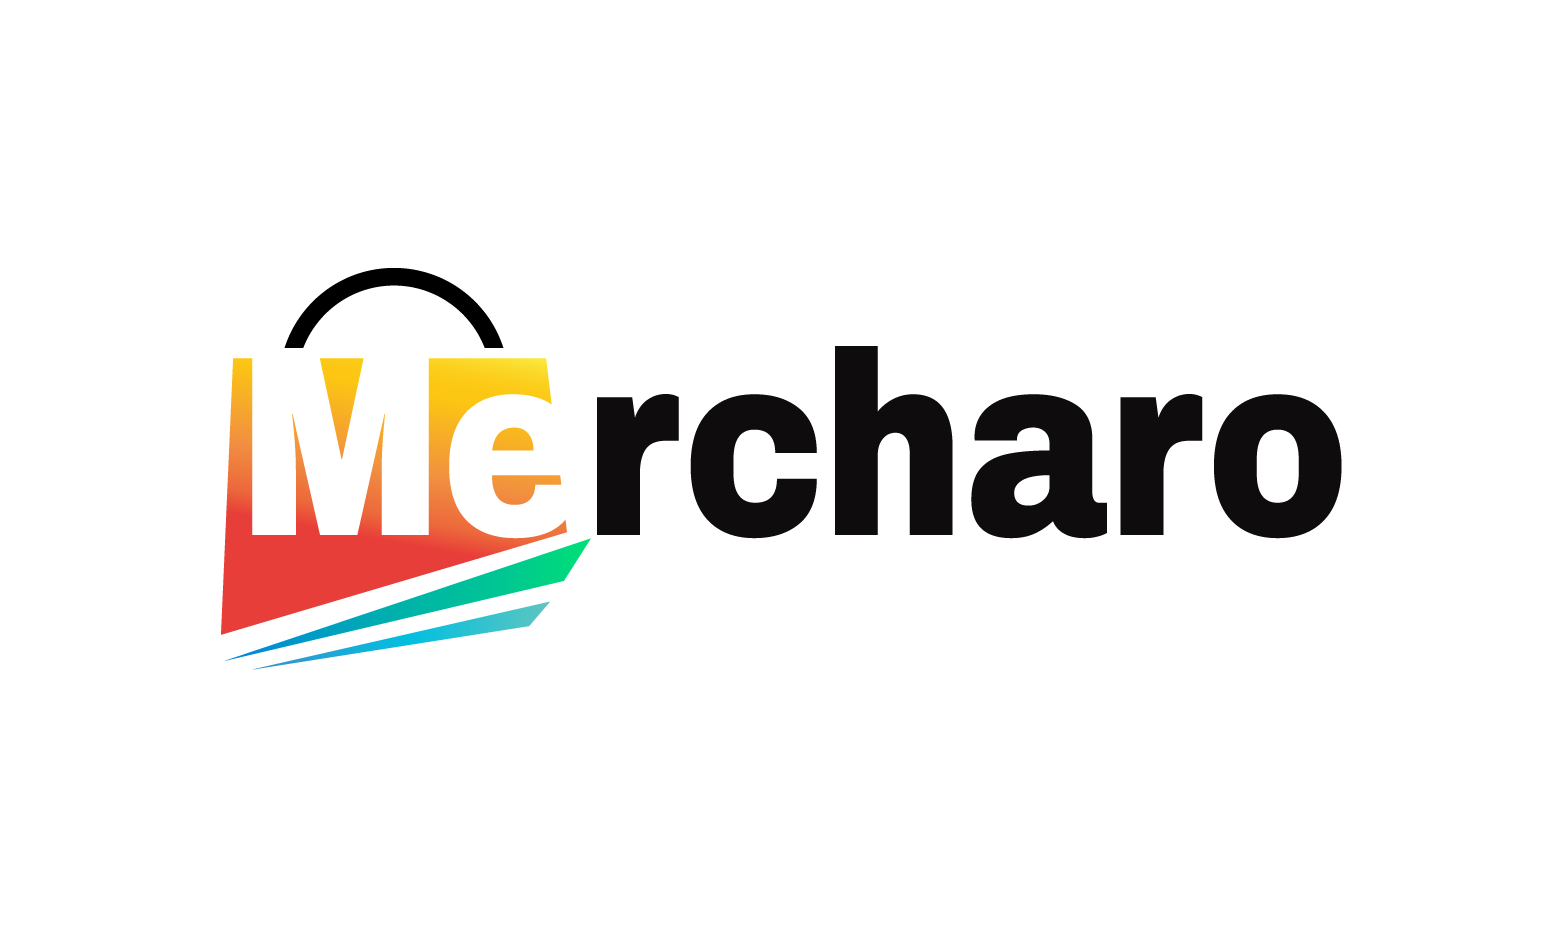 Mercharo.com - Creative brandable domain for sale